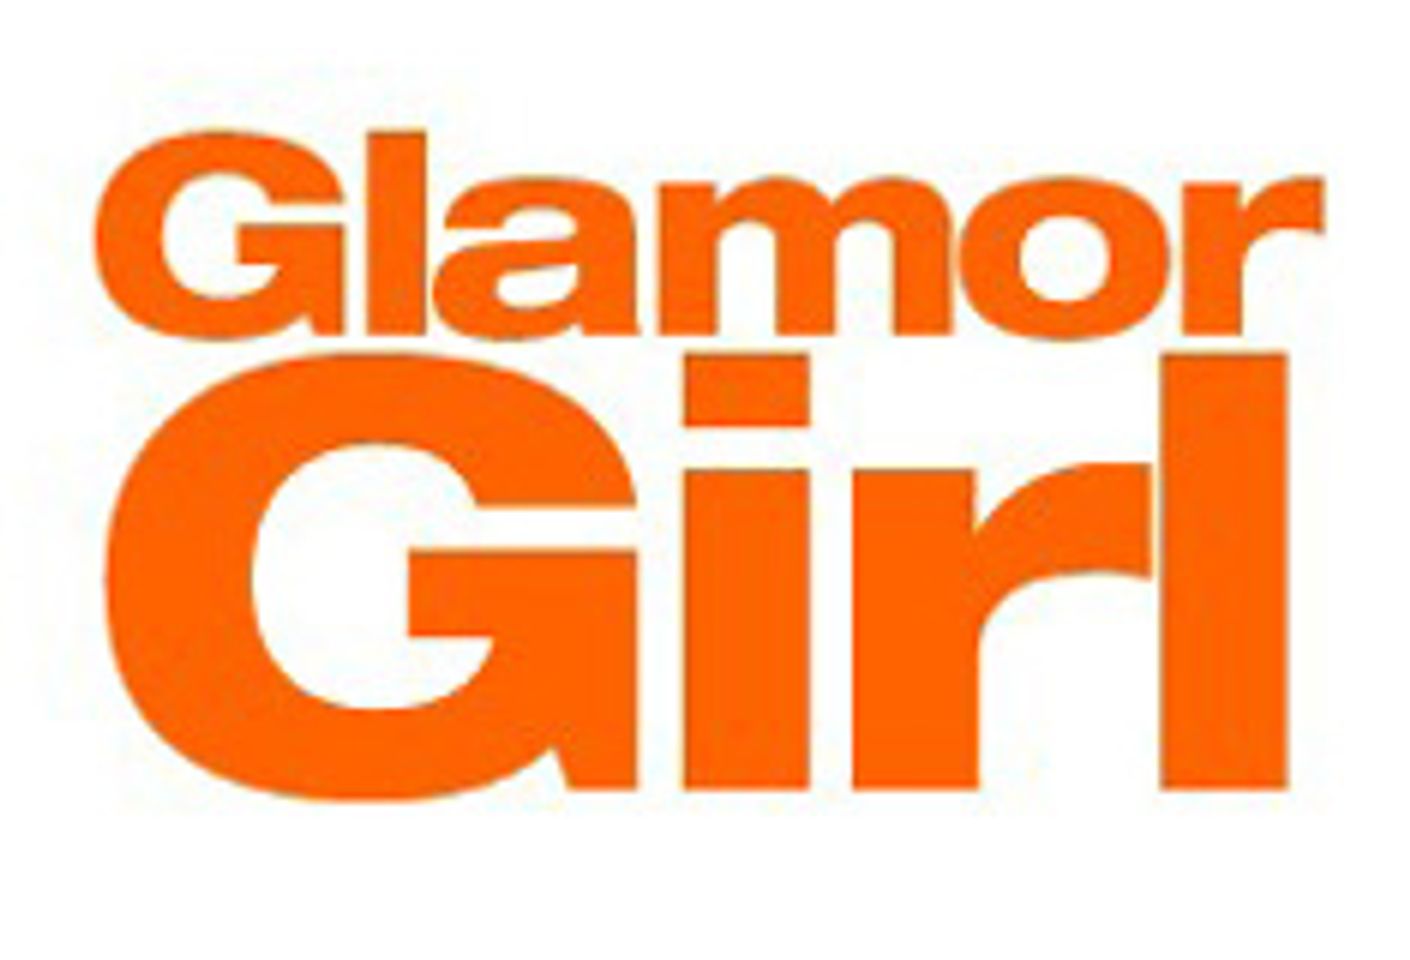 Glamor Girl Magazine To Distribute Via Romantix Stores